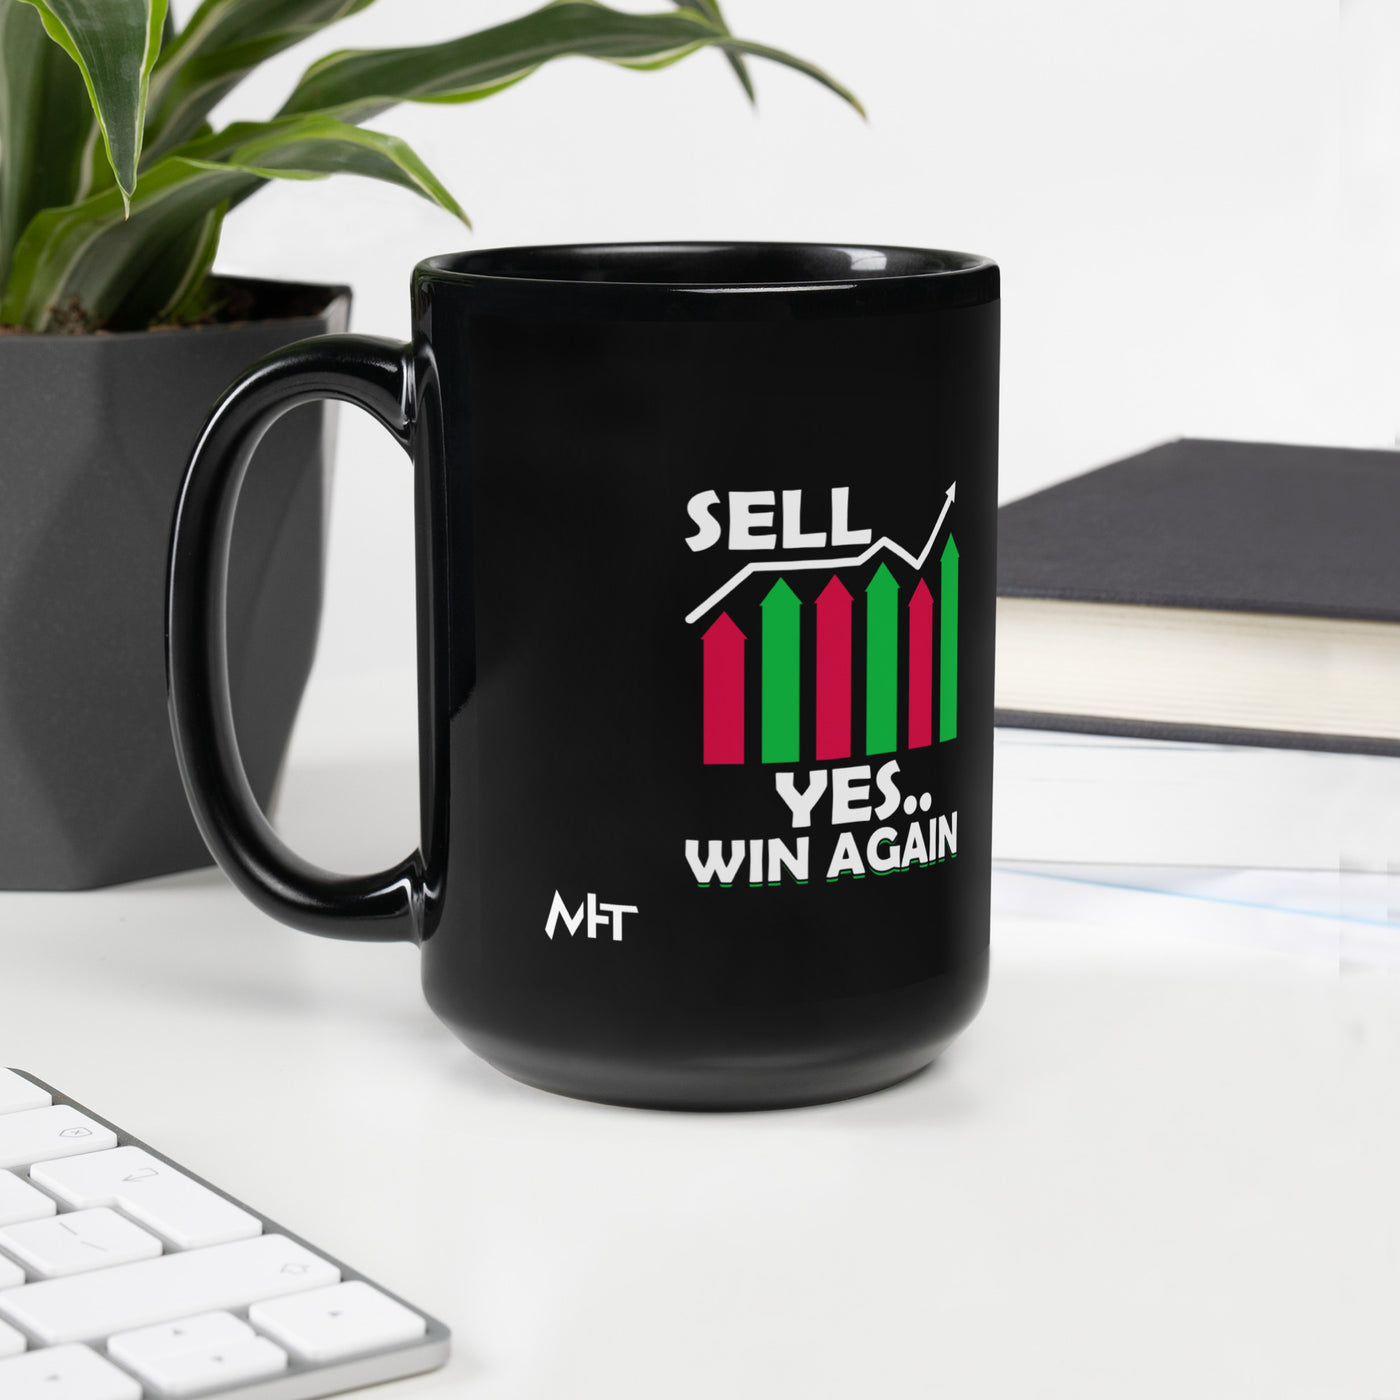 Sell: Yes..Win again! - Black Glossy Mug